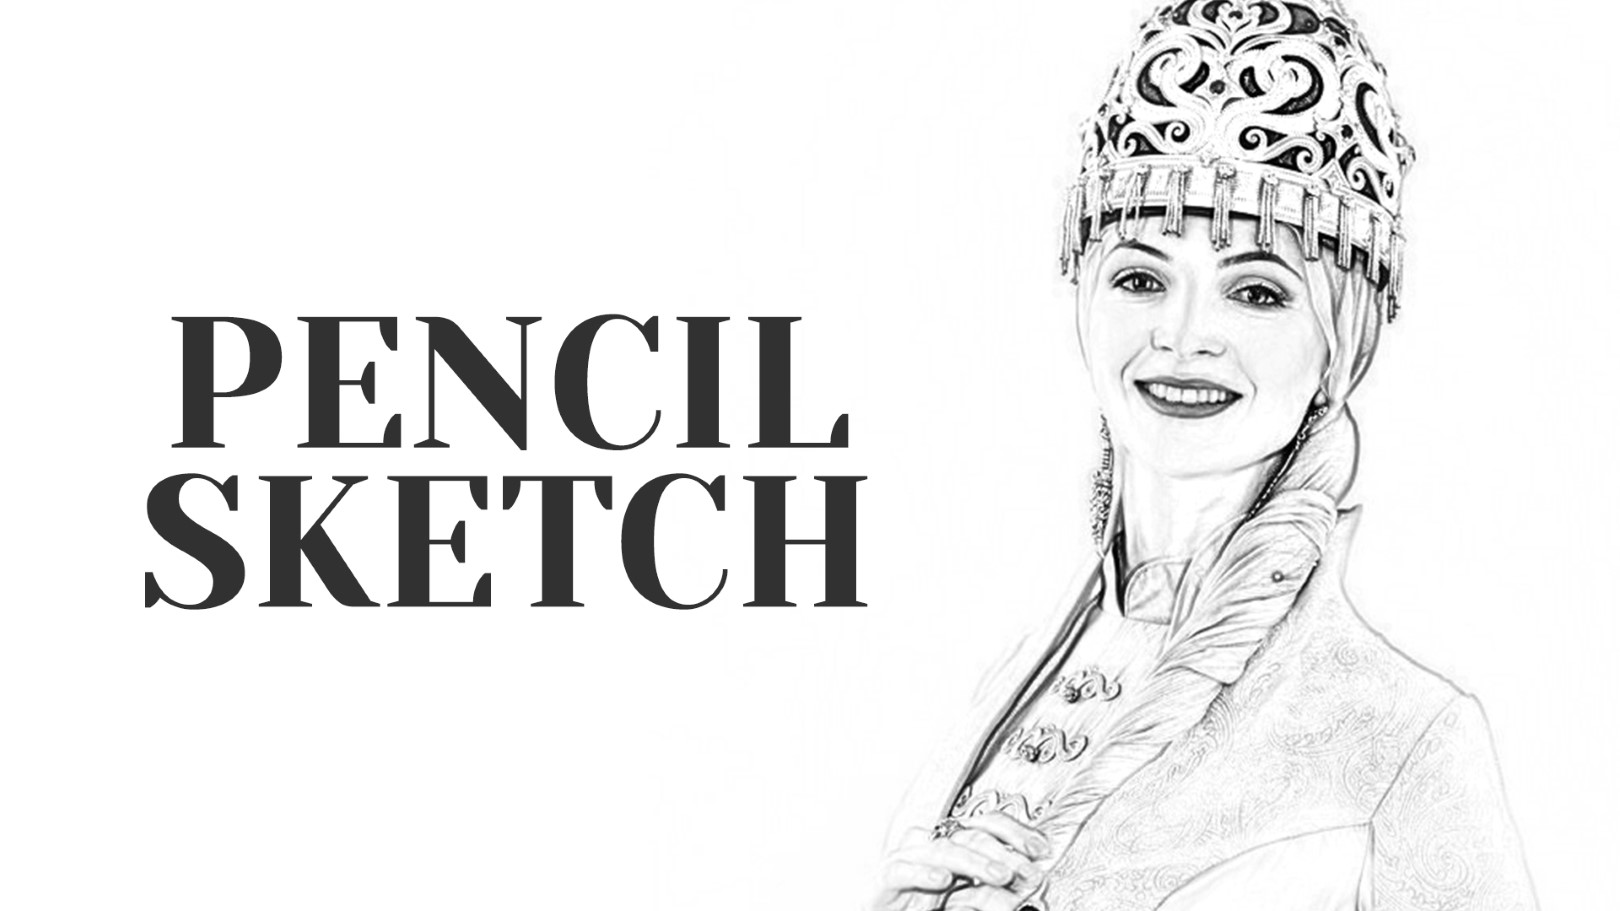 pencil sketch photoshop action free download 1 (Custom)